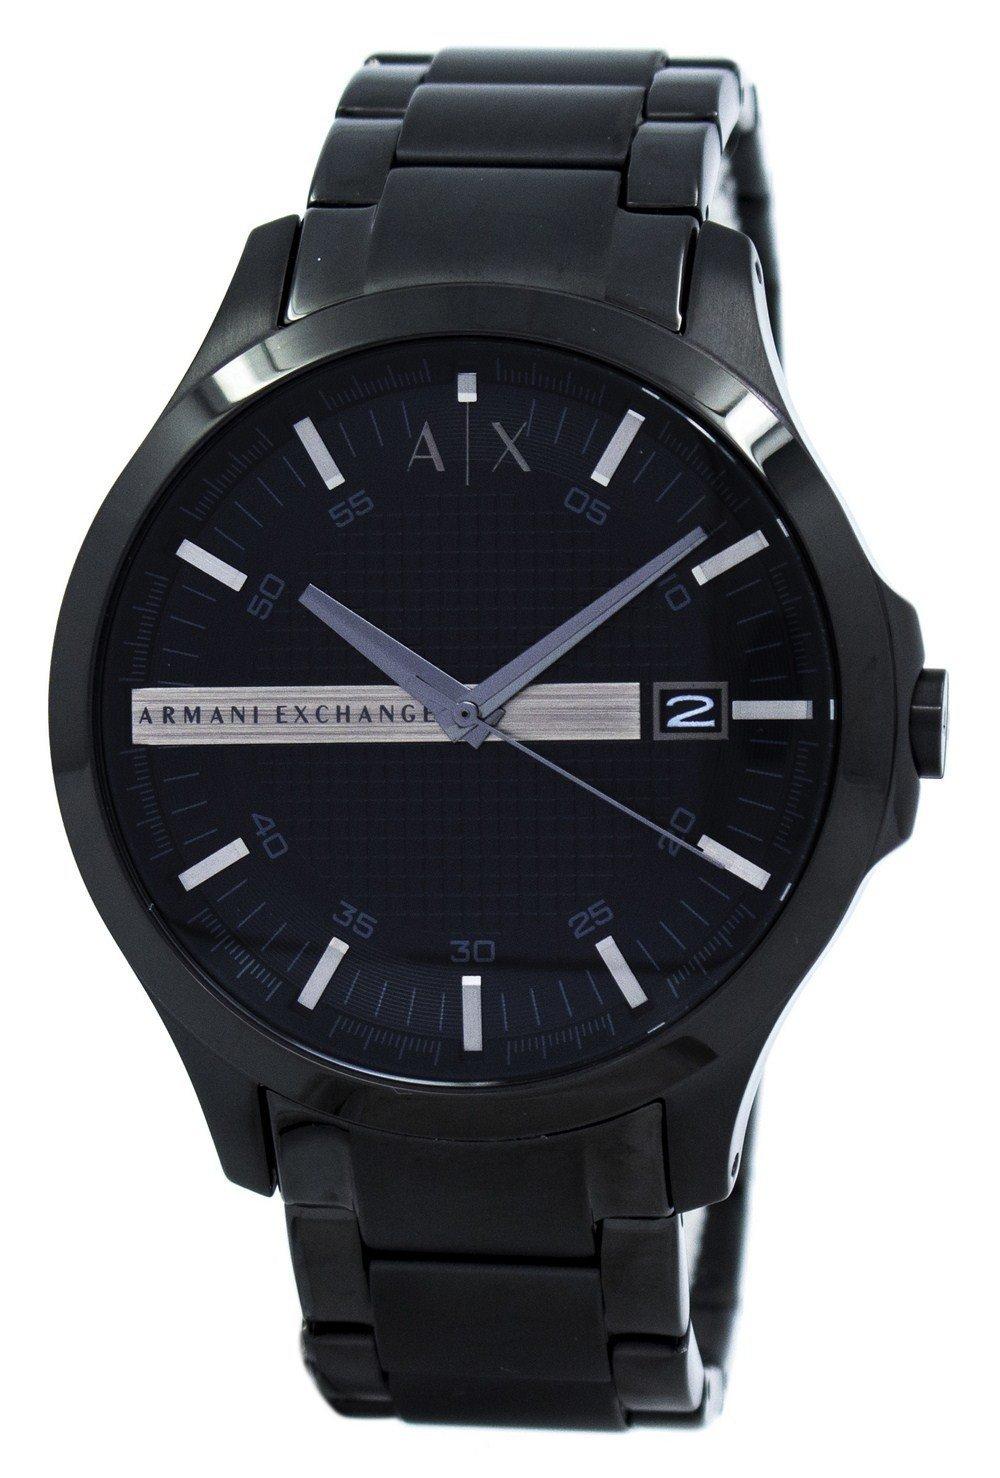 Armani Exchange Black Dial Stainless Steel AX2104 Men's Watch